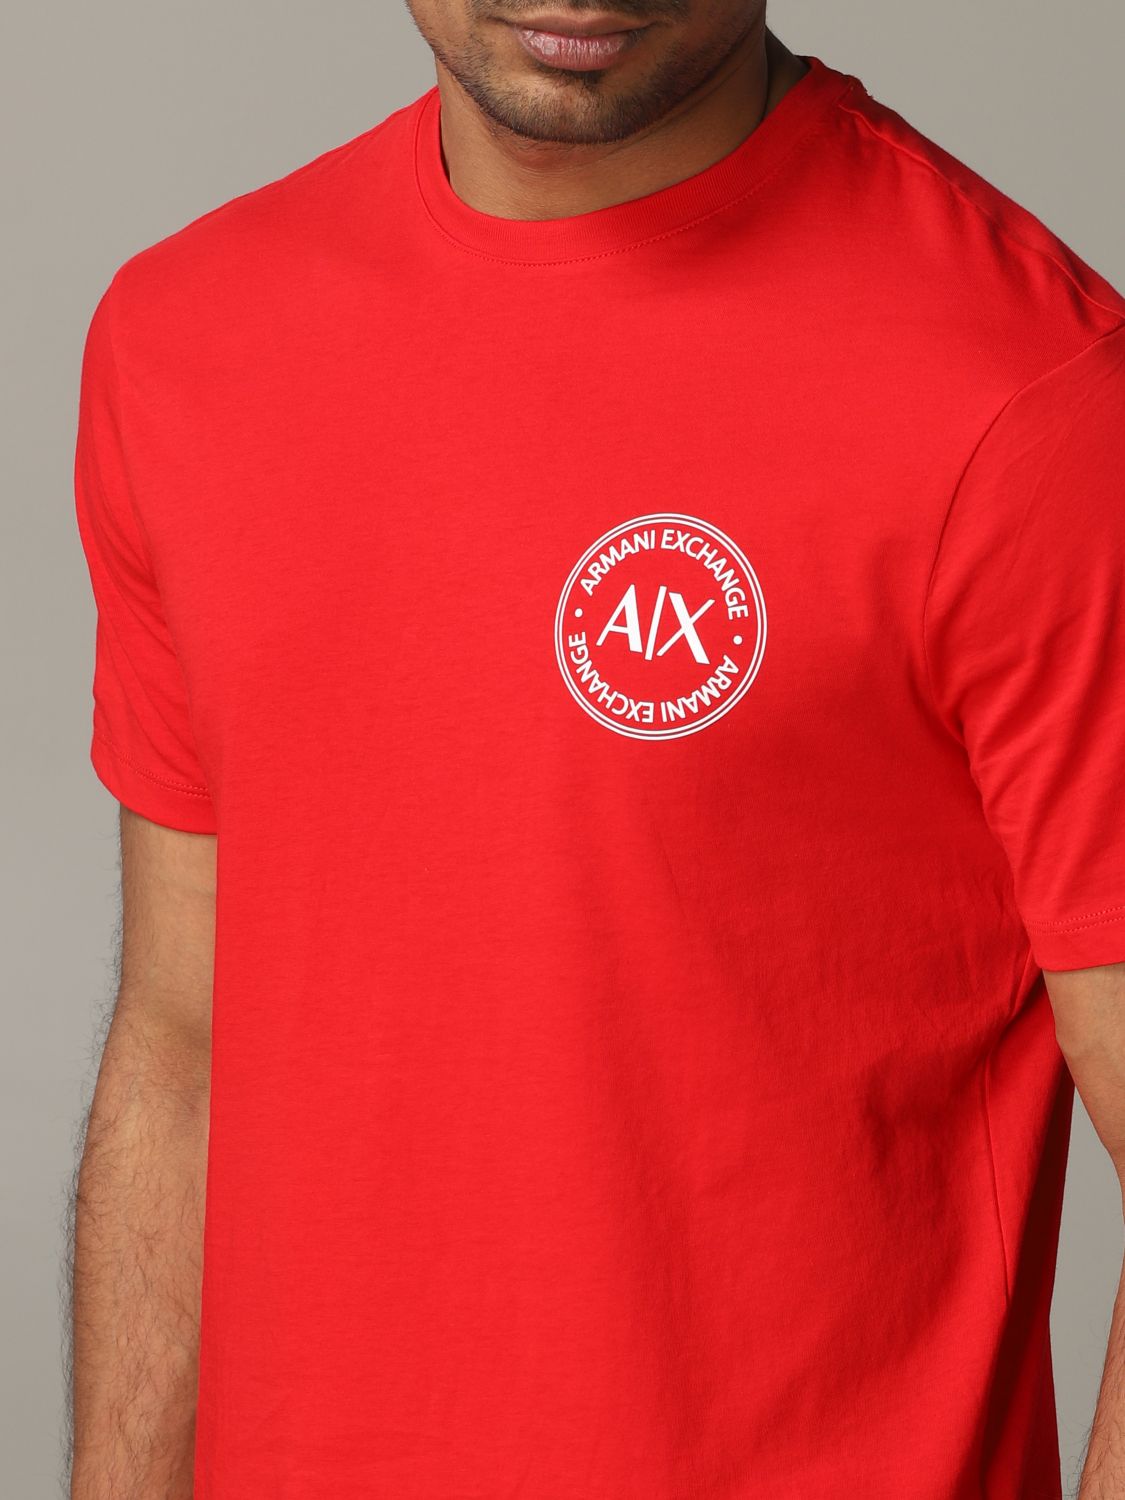 red armani exchange shirt